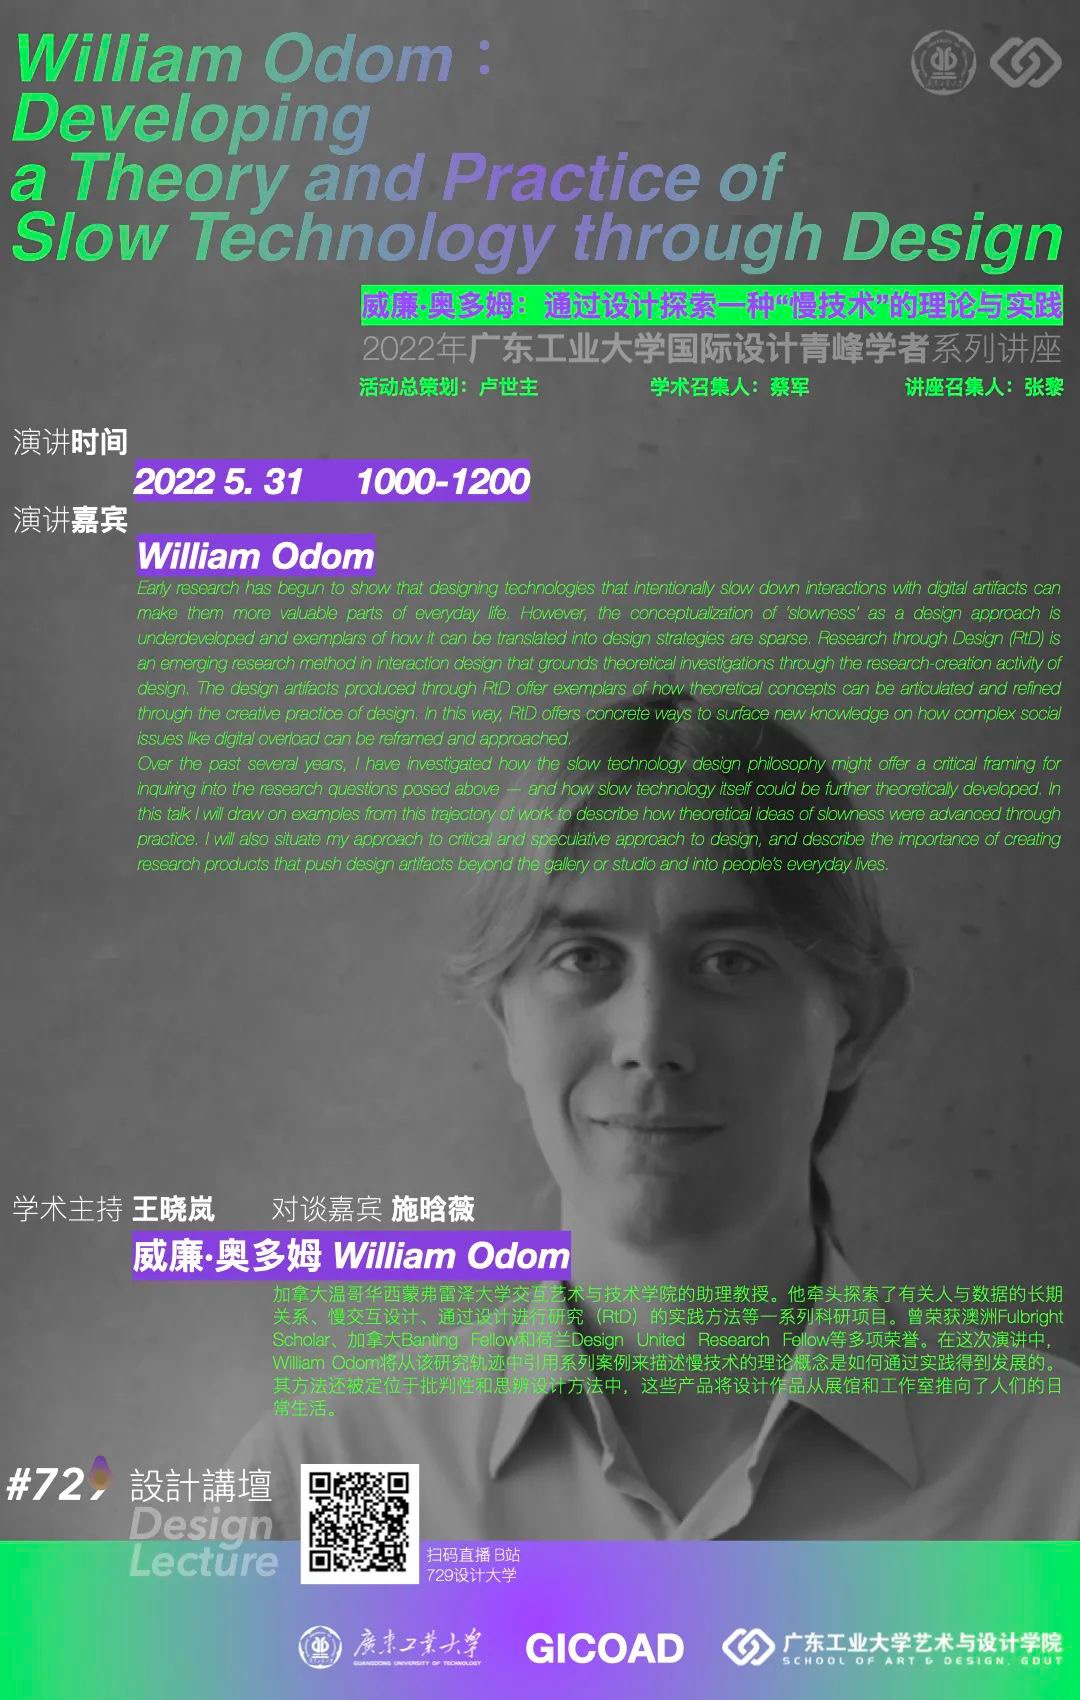 William Odom | 国际设计青峰学者系列讲座首位讲者